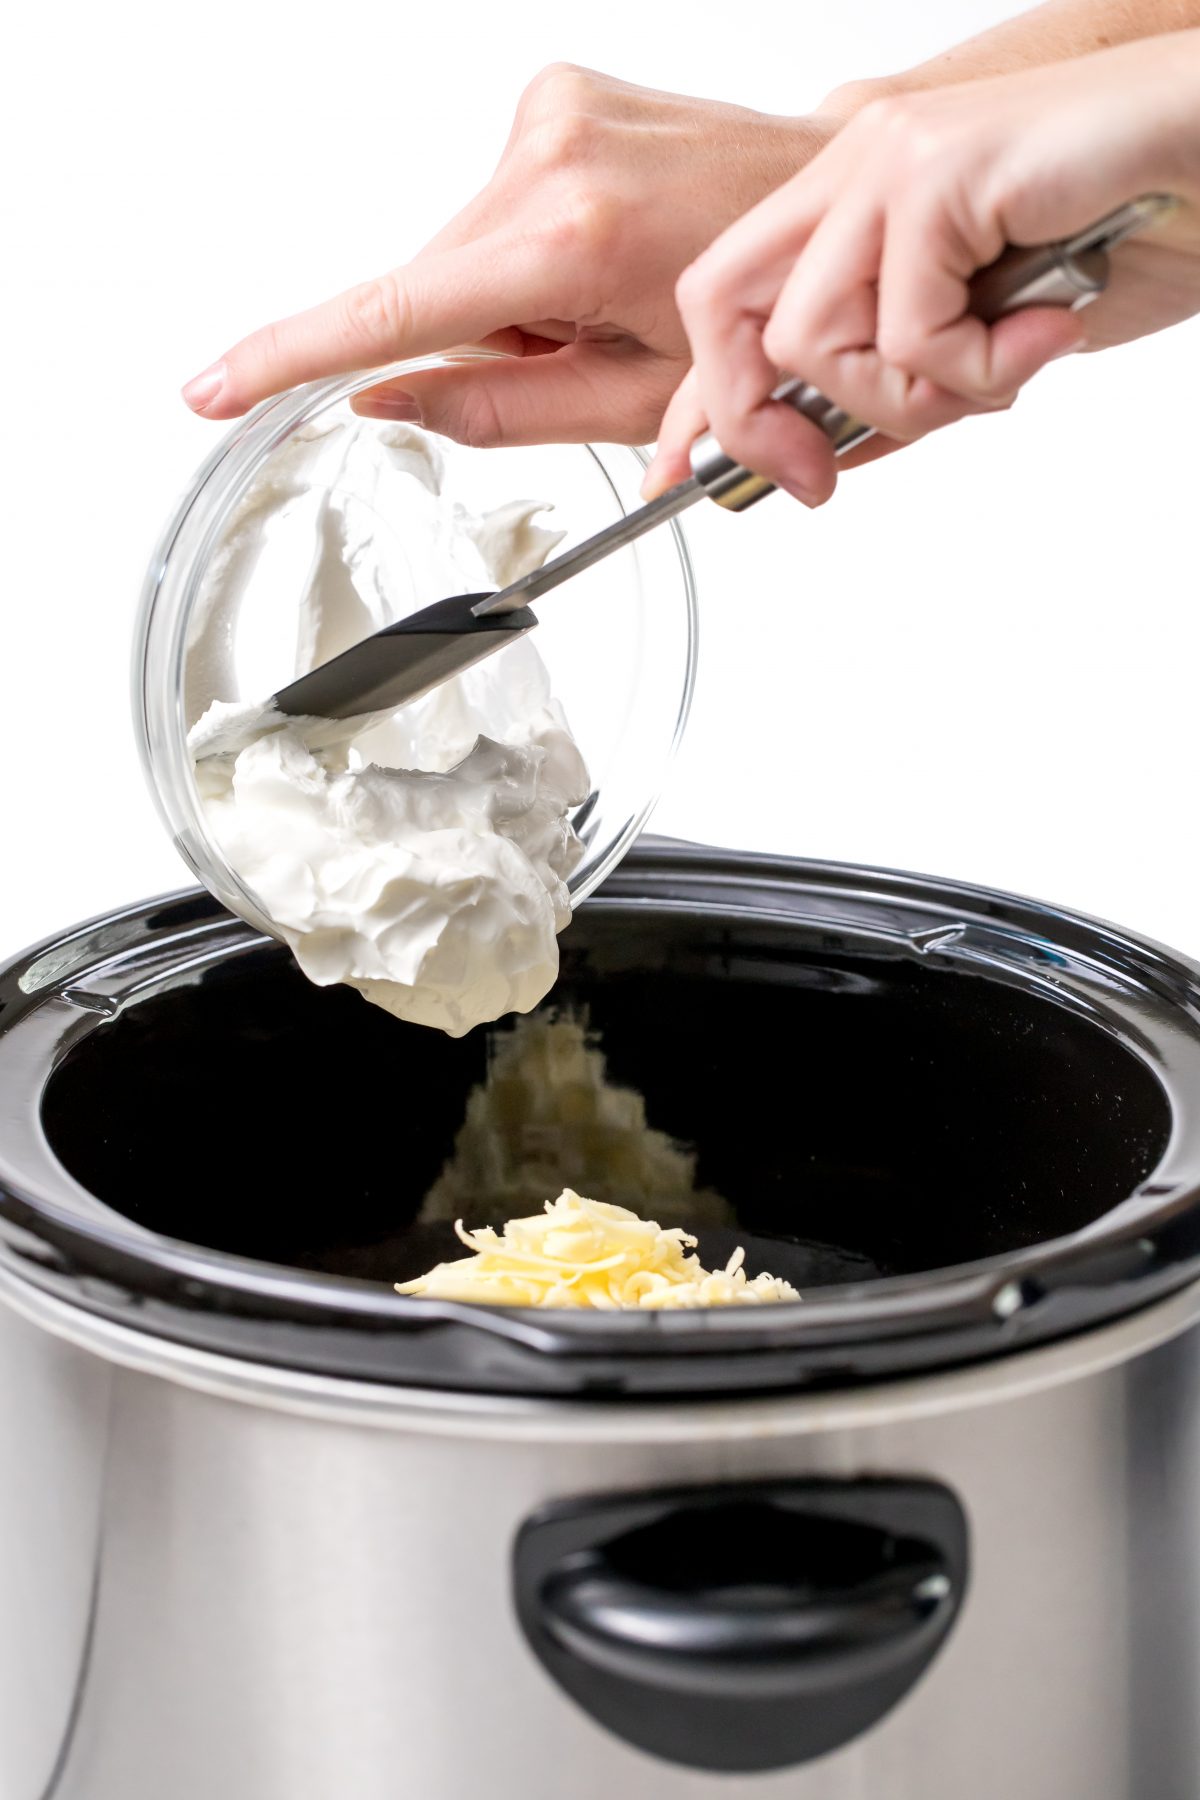 Scoop sour cream into Slow-cooker pale ale corn dip